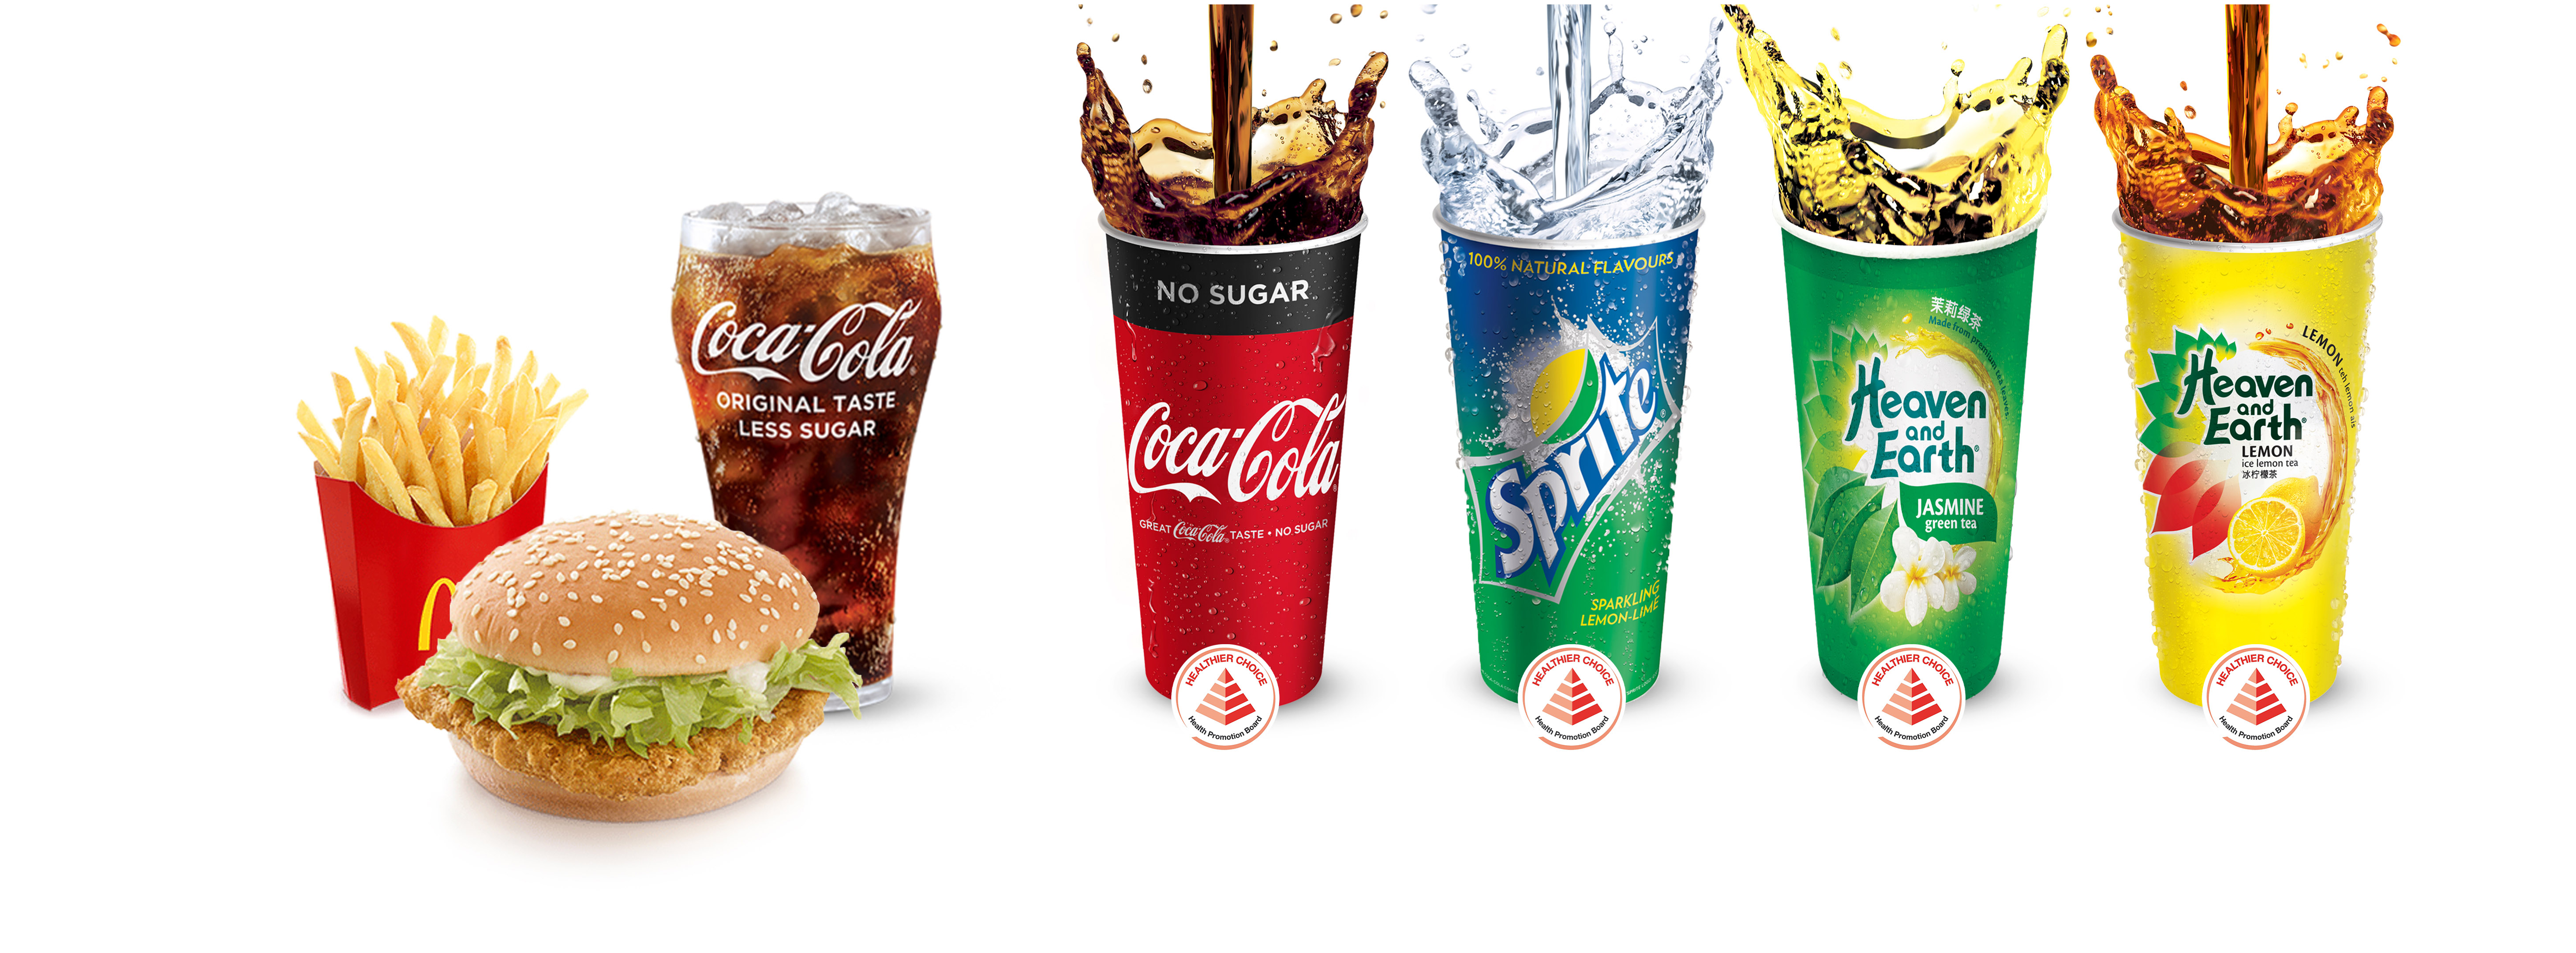 Mcdonald S Singapore And Coca Cola Singapore Partner To Promote A Healthier Fast Food Craving Nestia